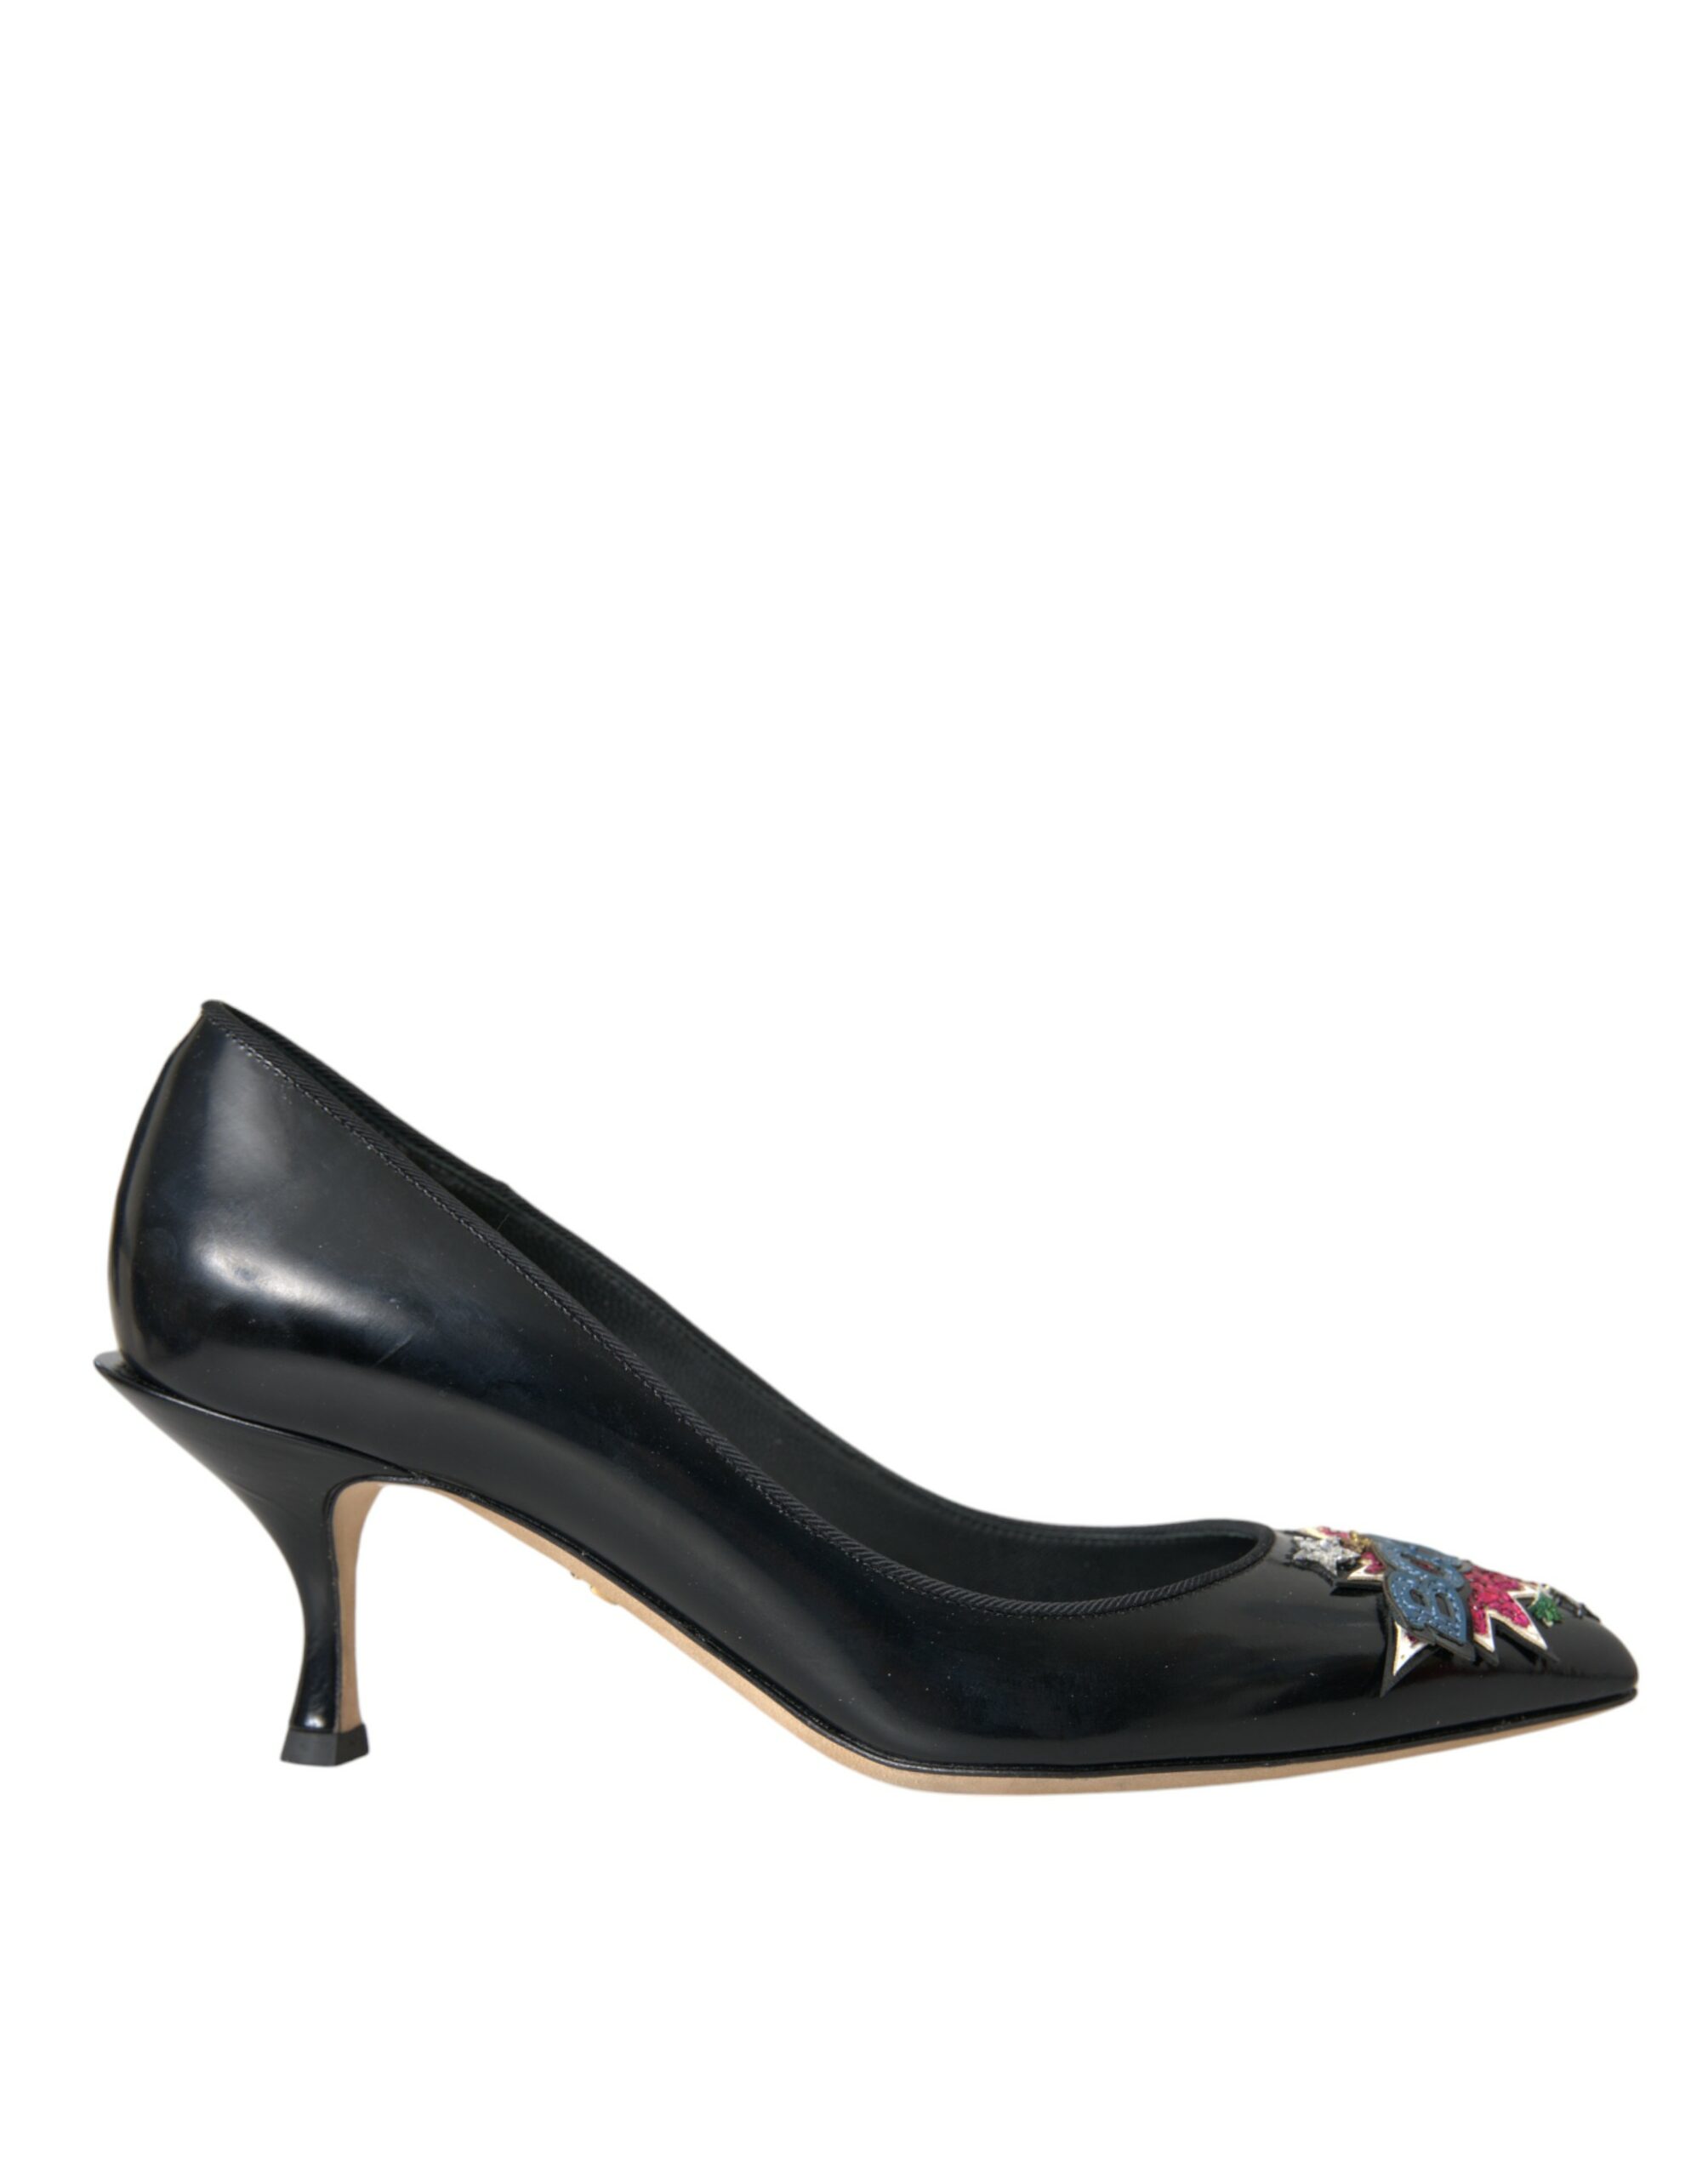 Dolce & Gabbana Black Leather BOOM Patch Heels Pumps Shoes EU37/US6.5 Black